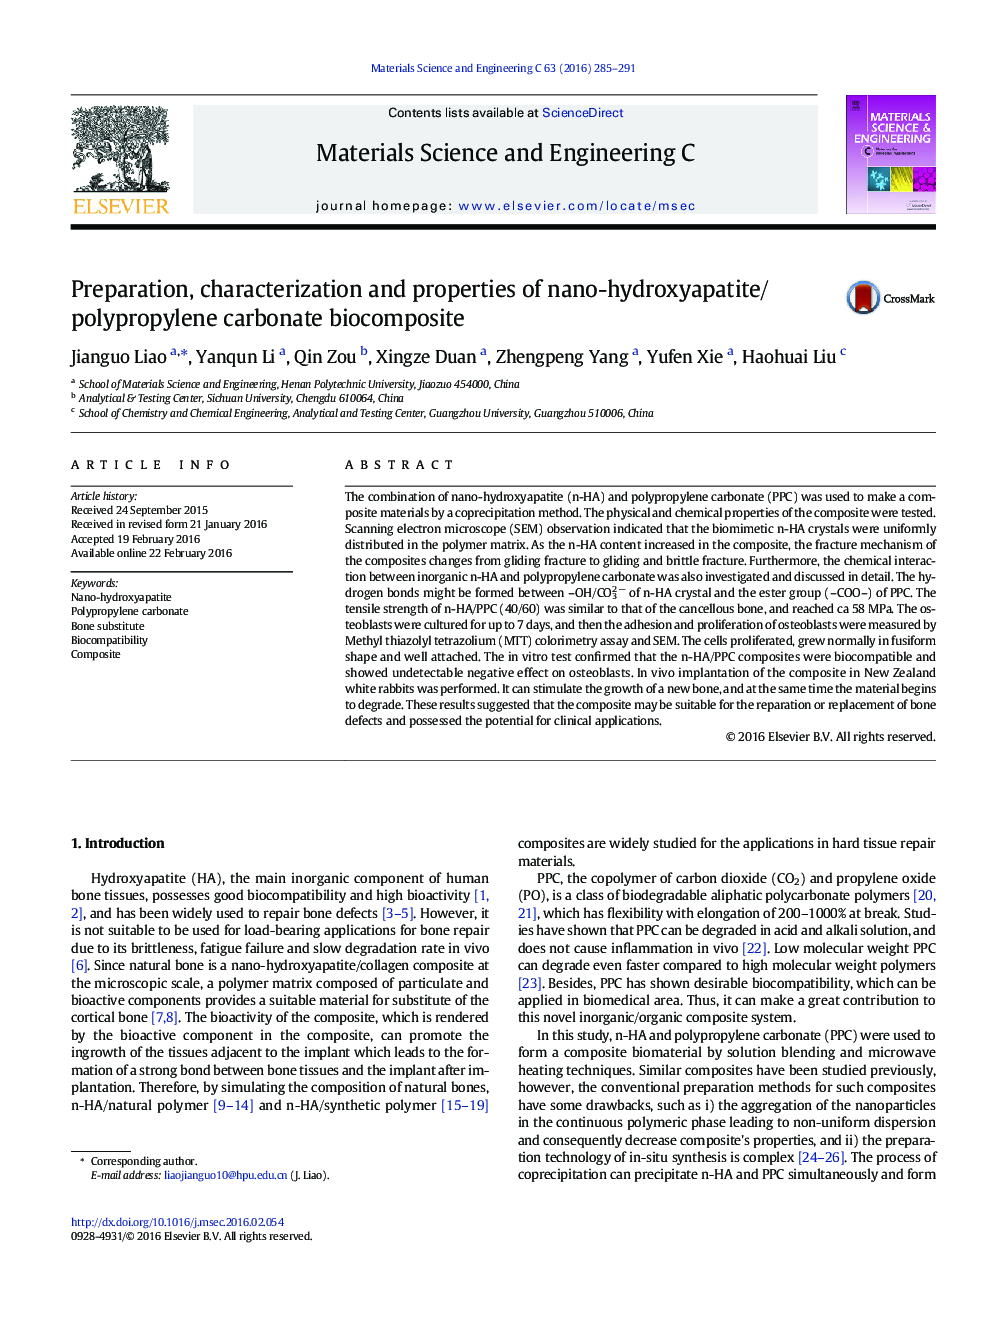 Preparation, characterization and properties of nano-hydroxyapatite/polypropylene carbonate biocomposite